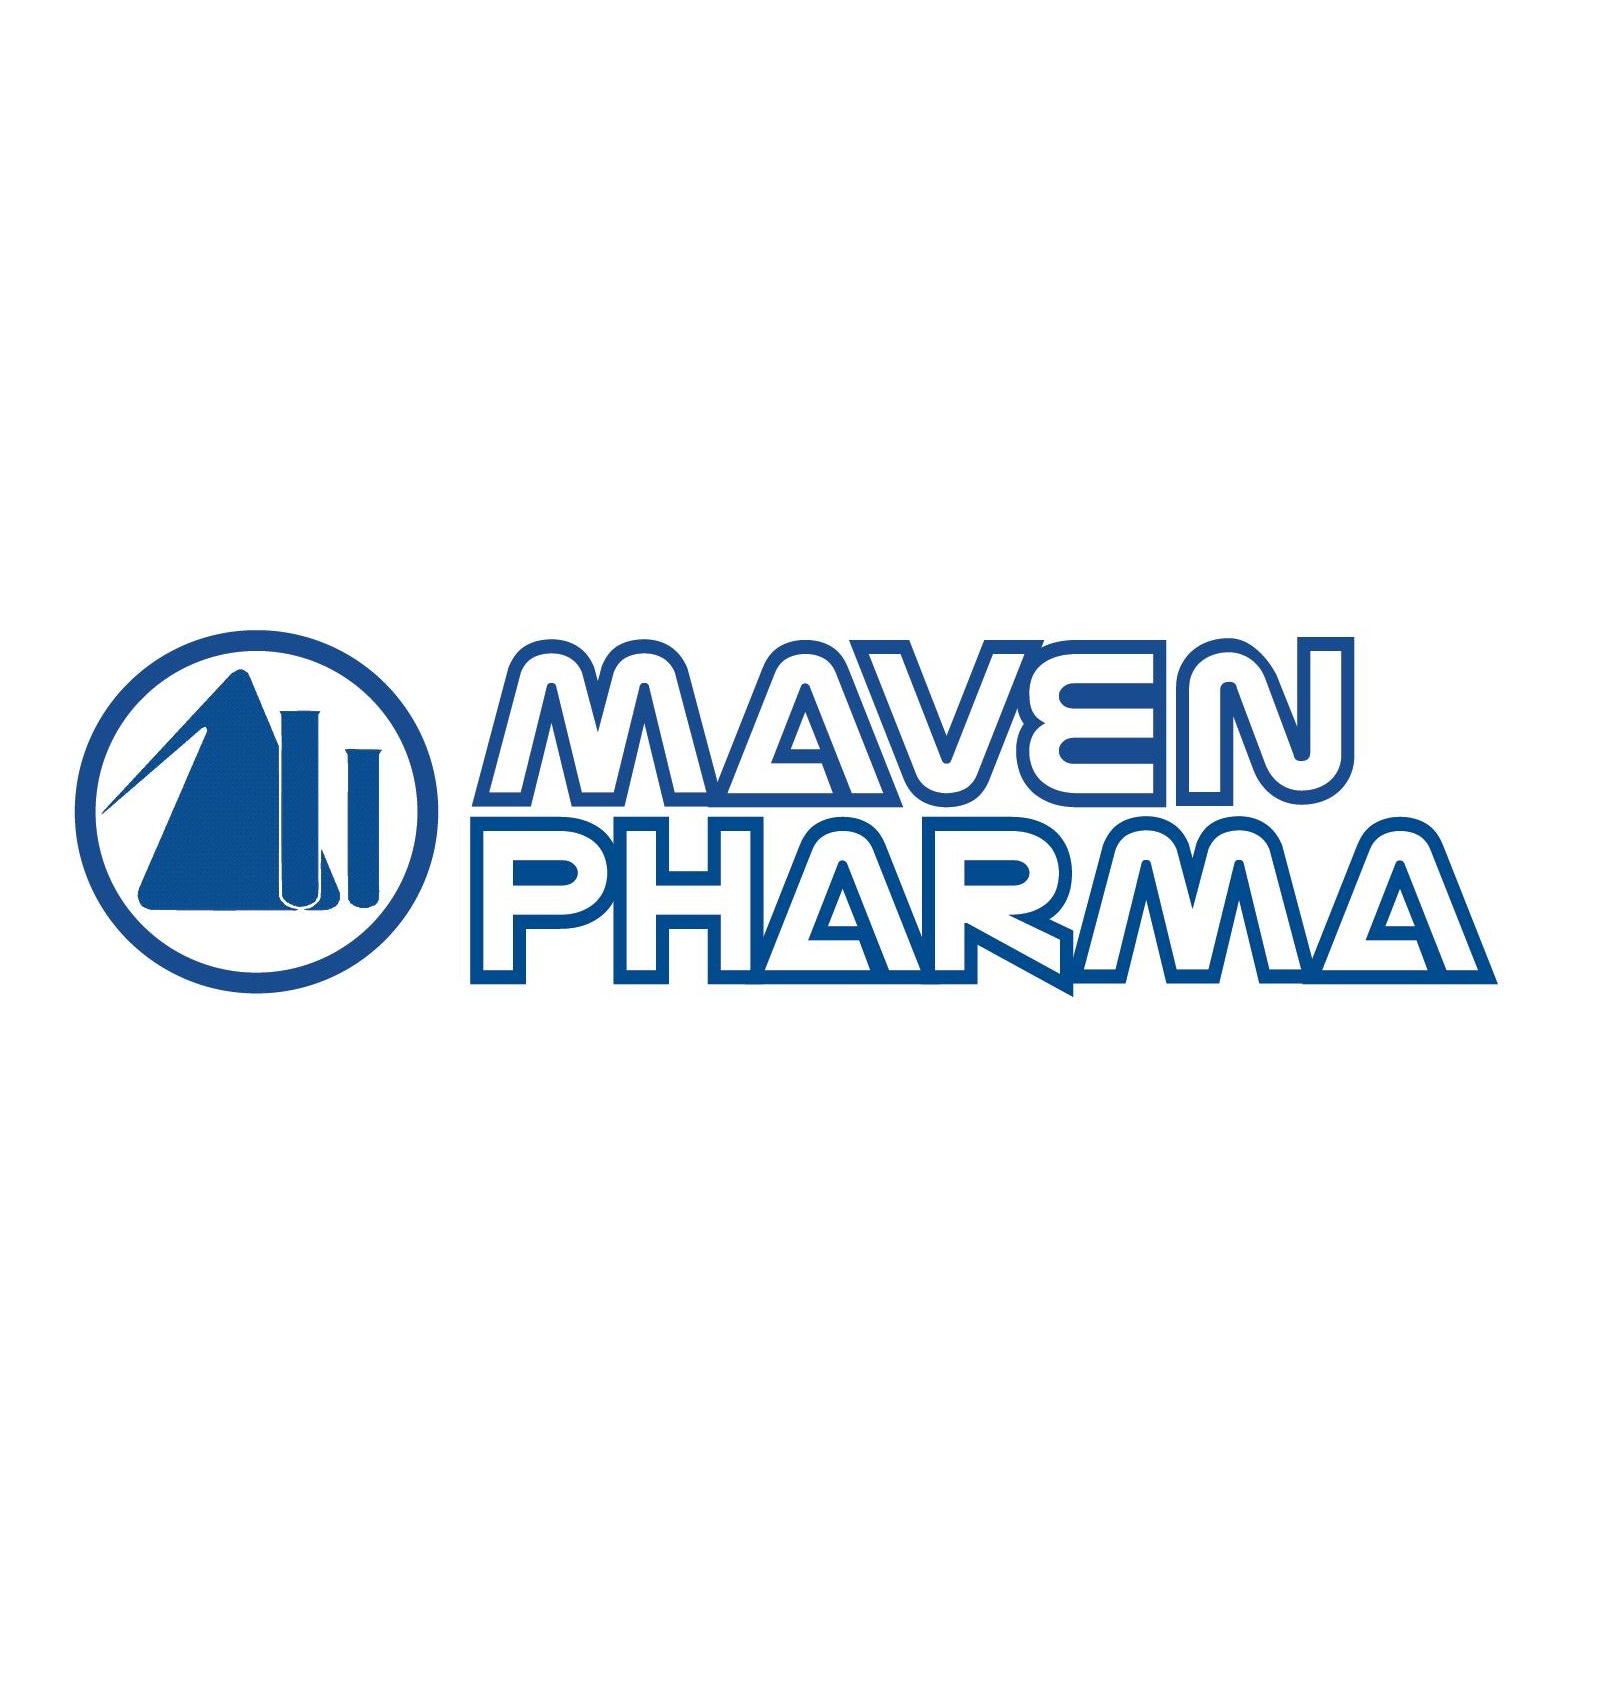 Maven pharma Group